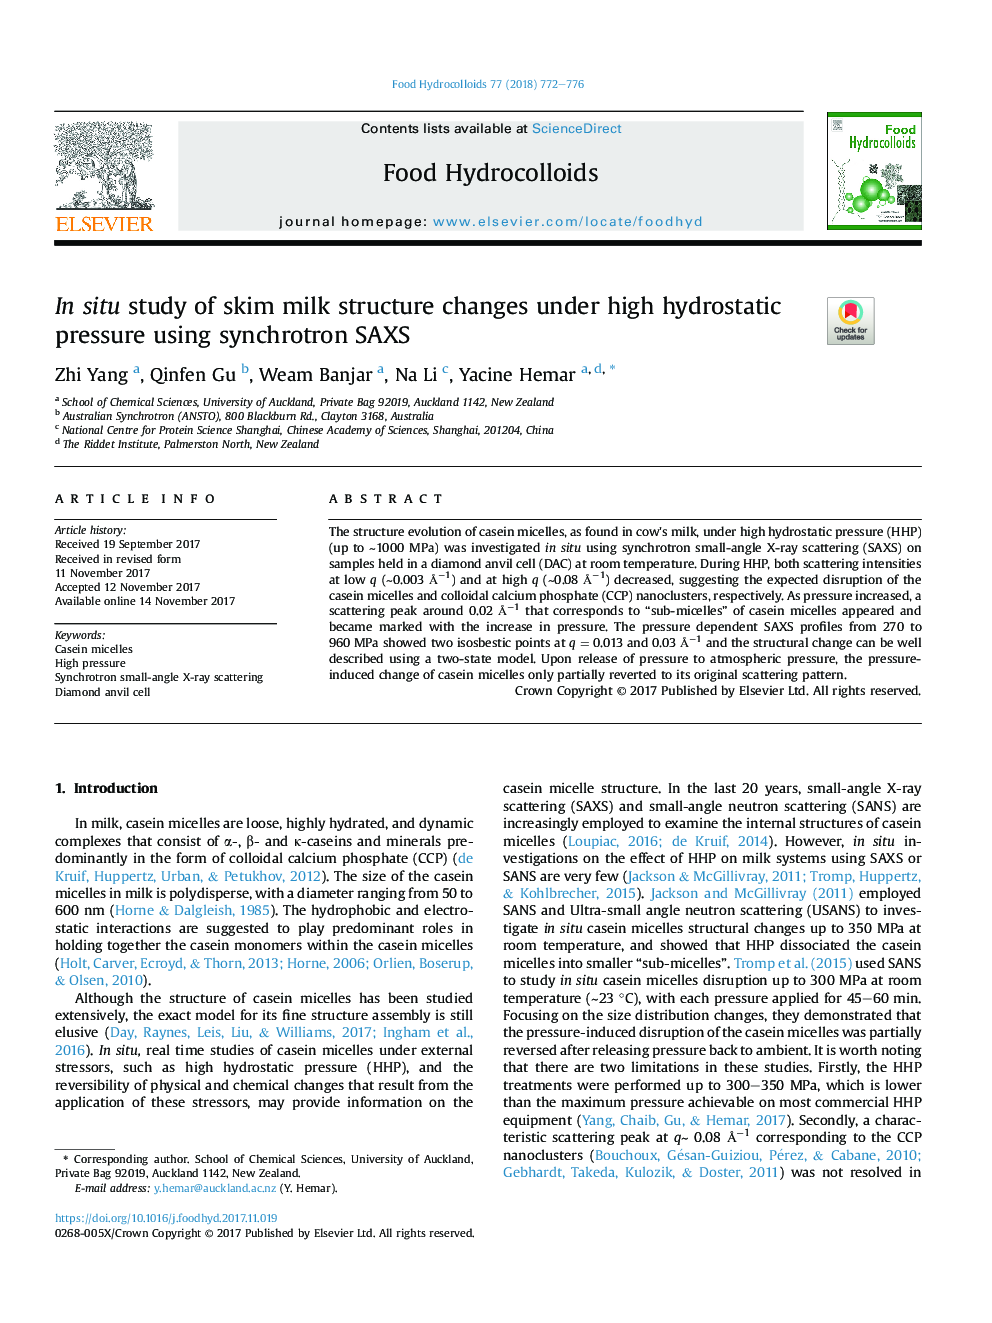 In situ study of skim milk structure changes under high hydrostatic pressure using synchrotron SAXS